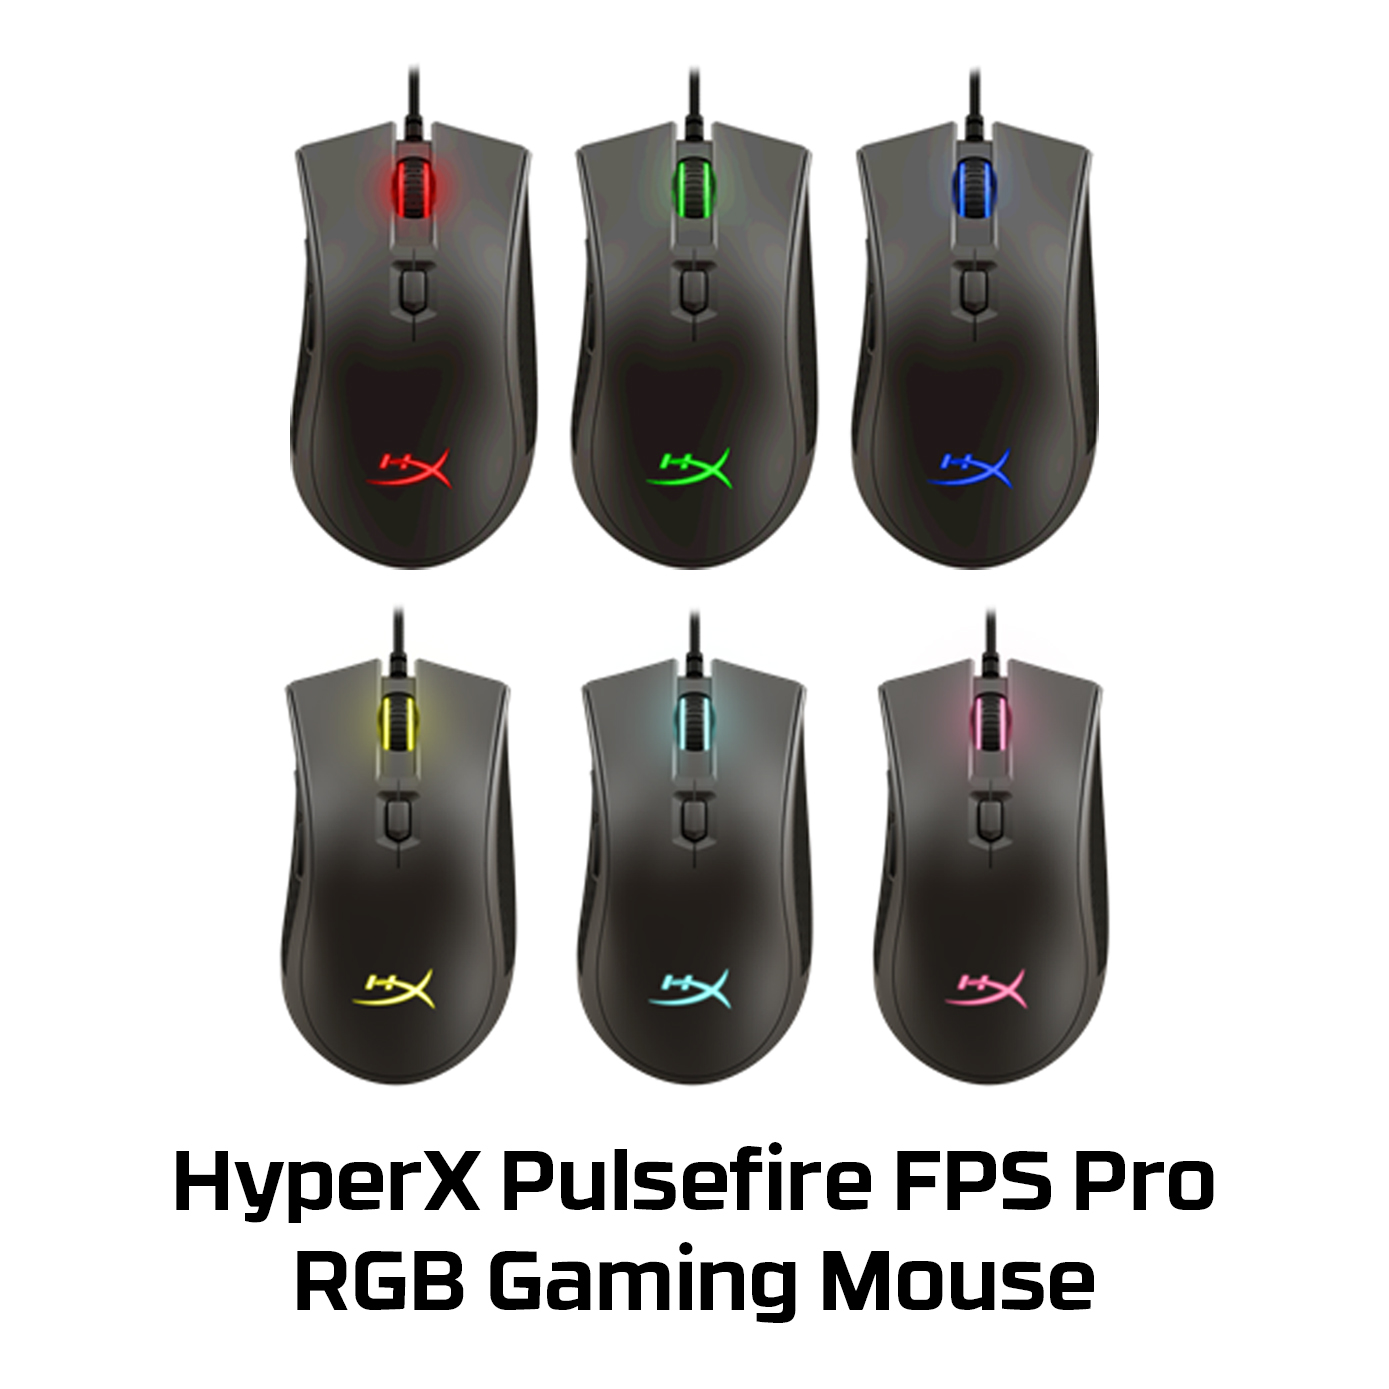 HyperX Announces Pulsefire FPS Pro Gaming Mouse